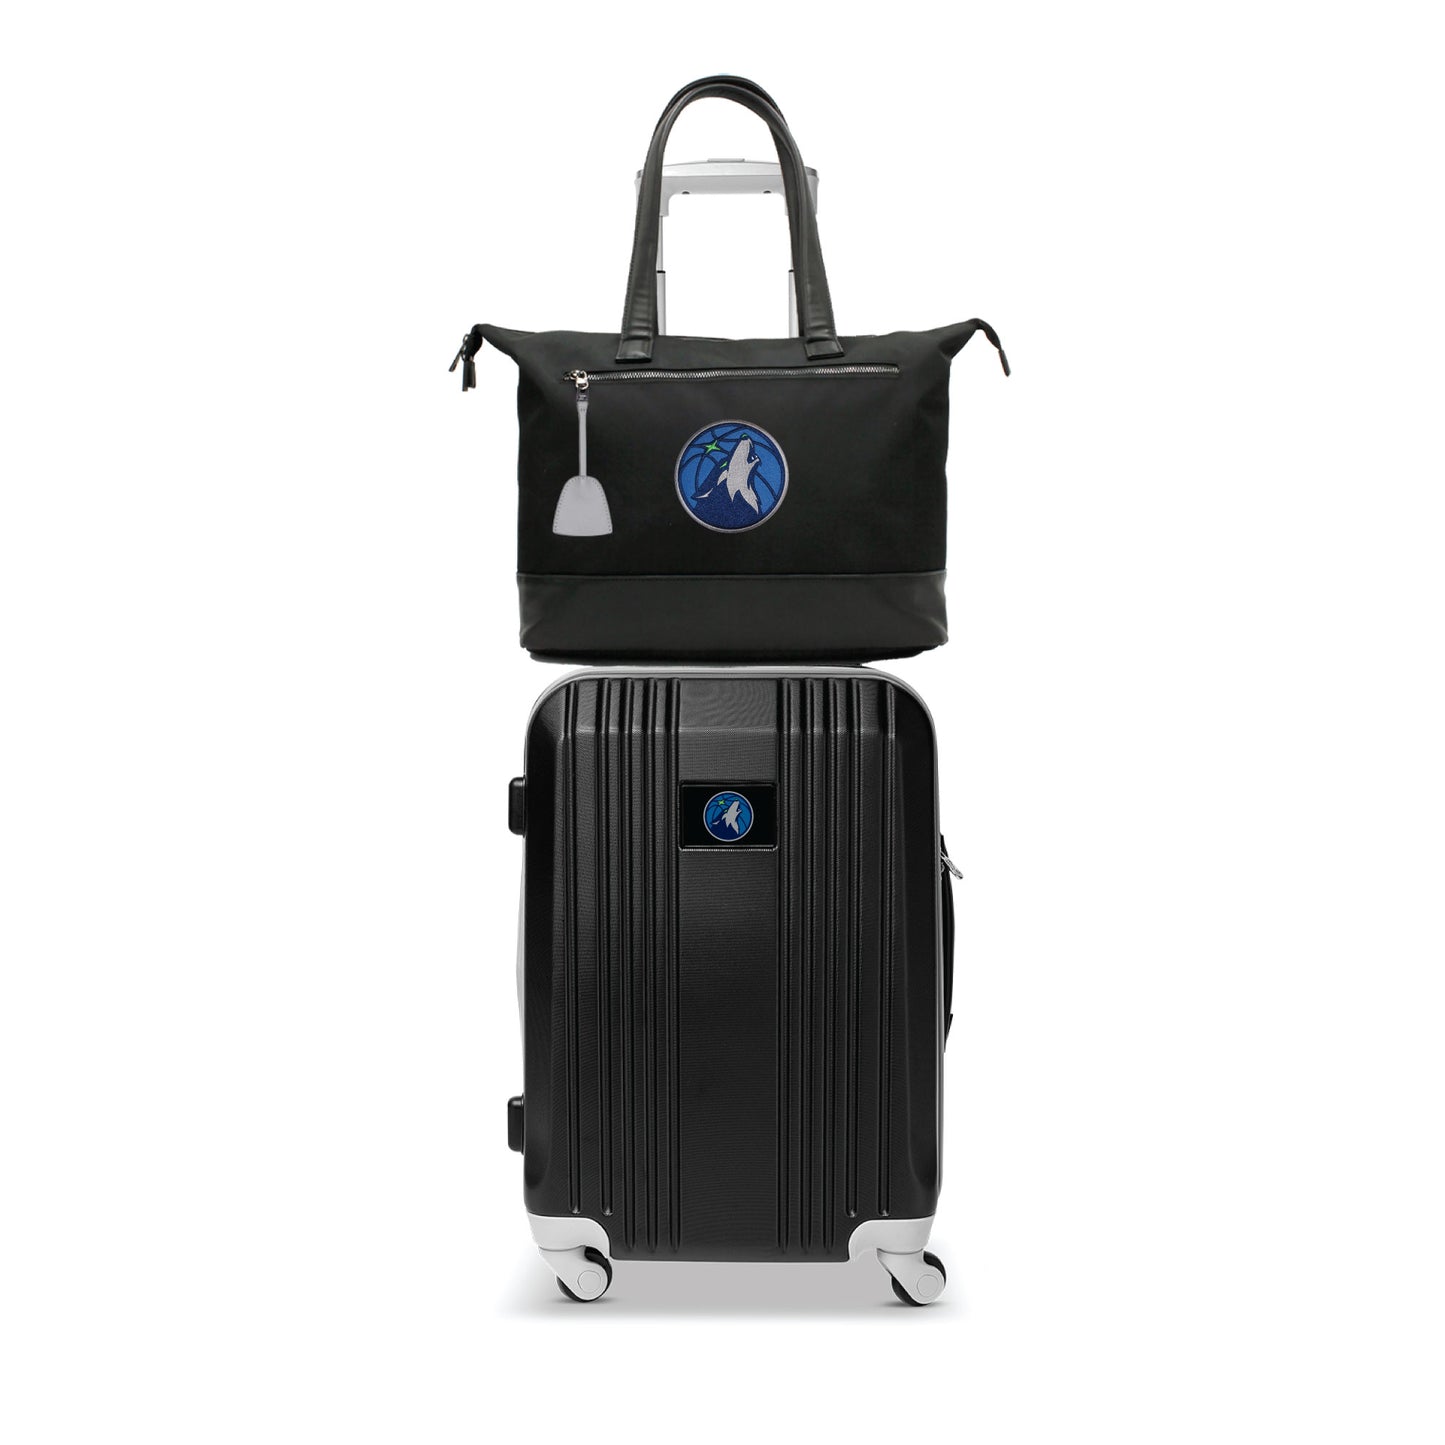 Minnesota Timberwolves Premium Laptop Tote Bag and Luggage Set